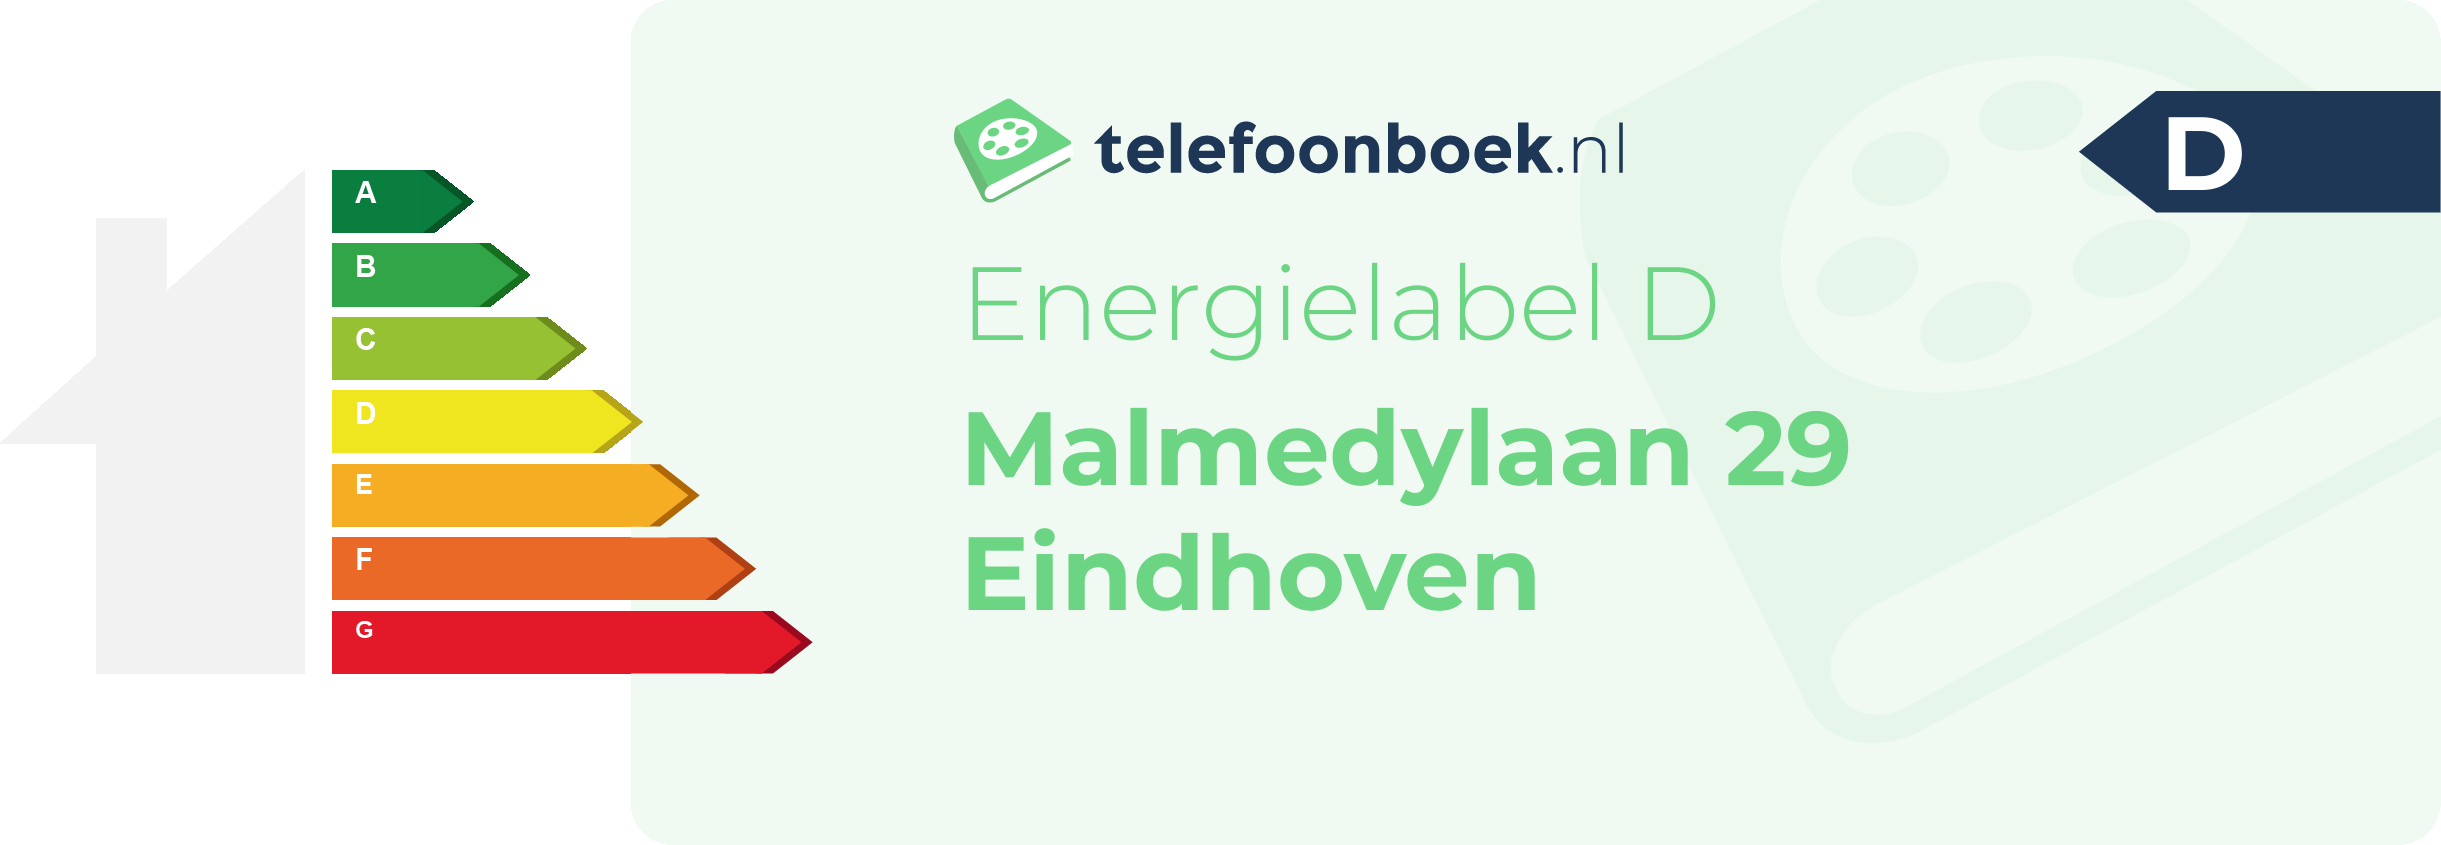 Energielabel Malmedylaan 29 Eindhoven